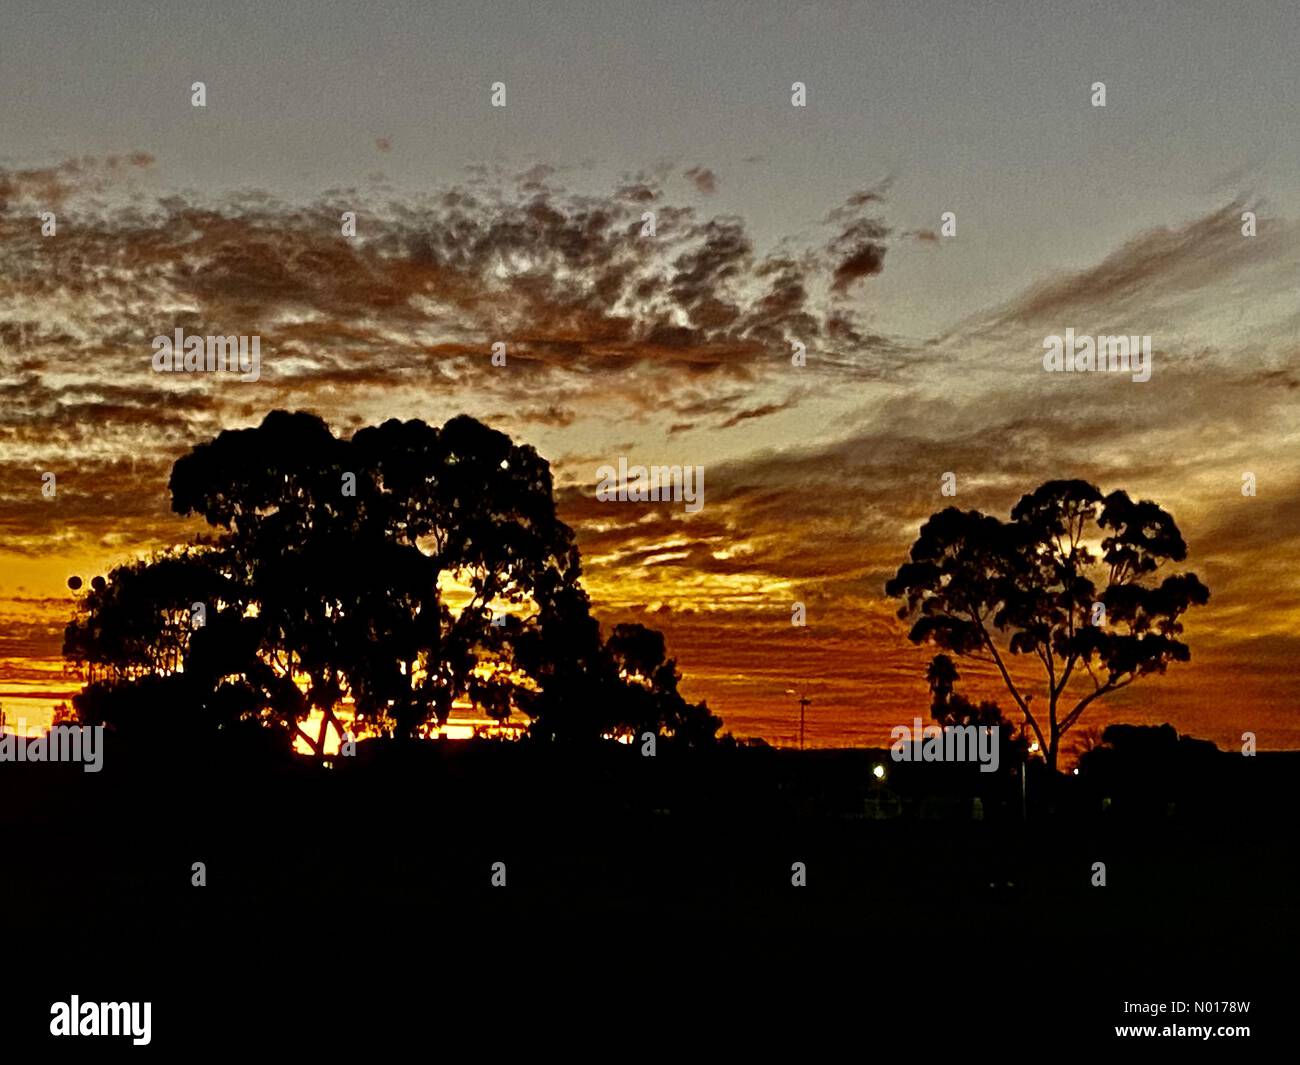 Farbenfrohe Sonnenuntergänge in Adelaide, Australien Credit: amer ghazzal/StockimoNews/Alamy Live News Stockfoto